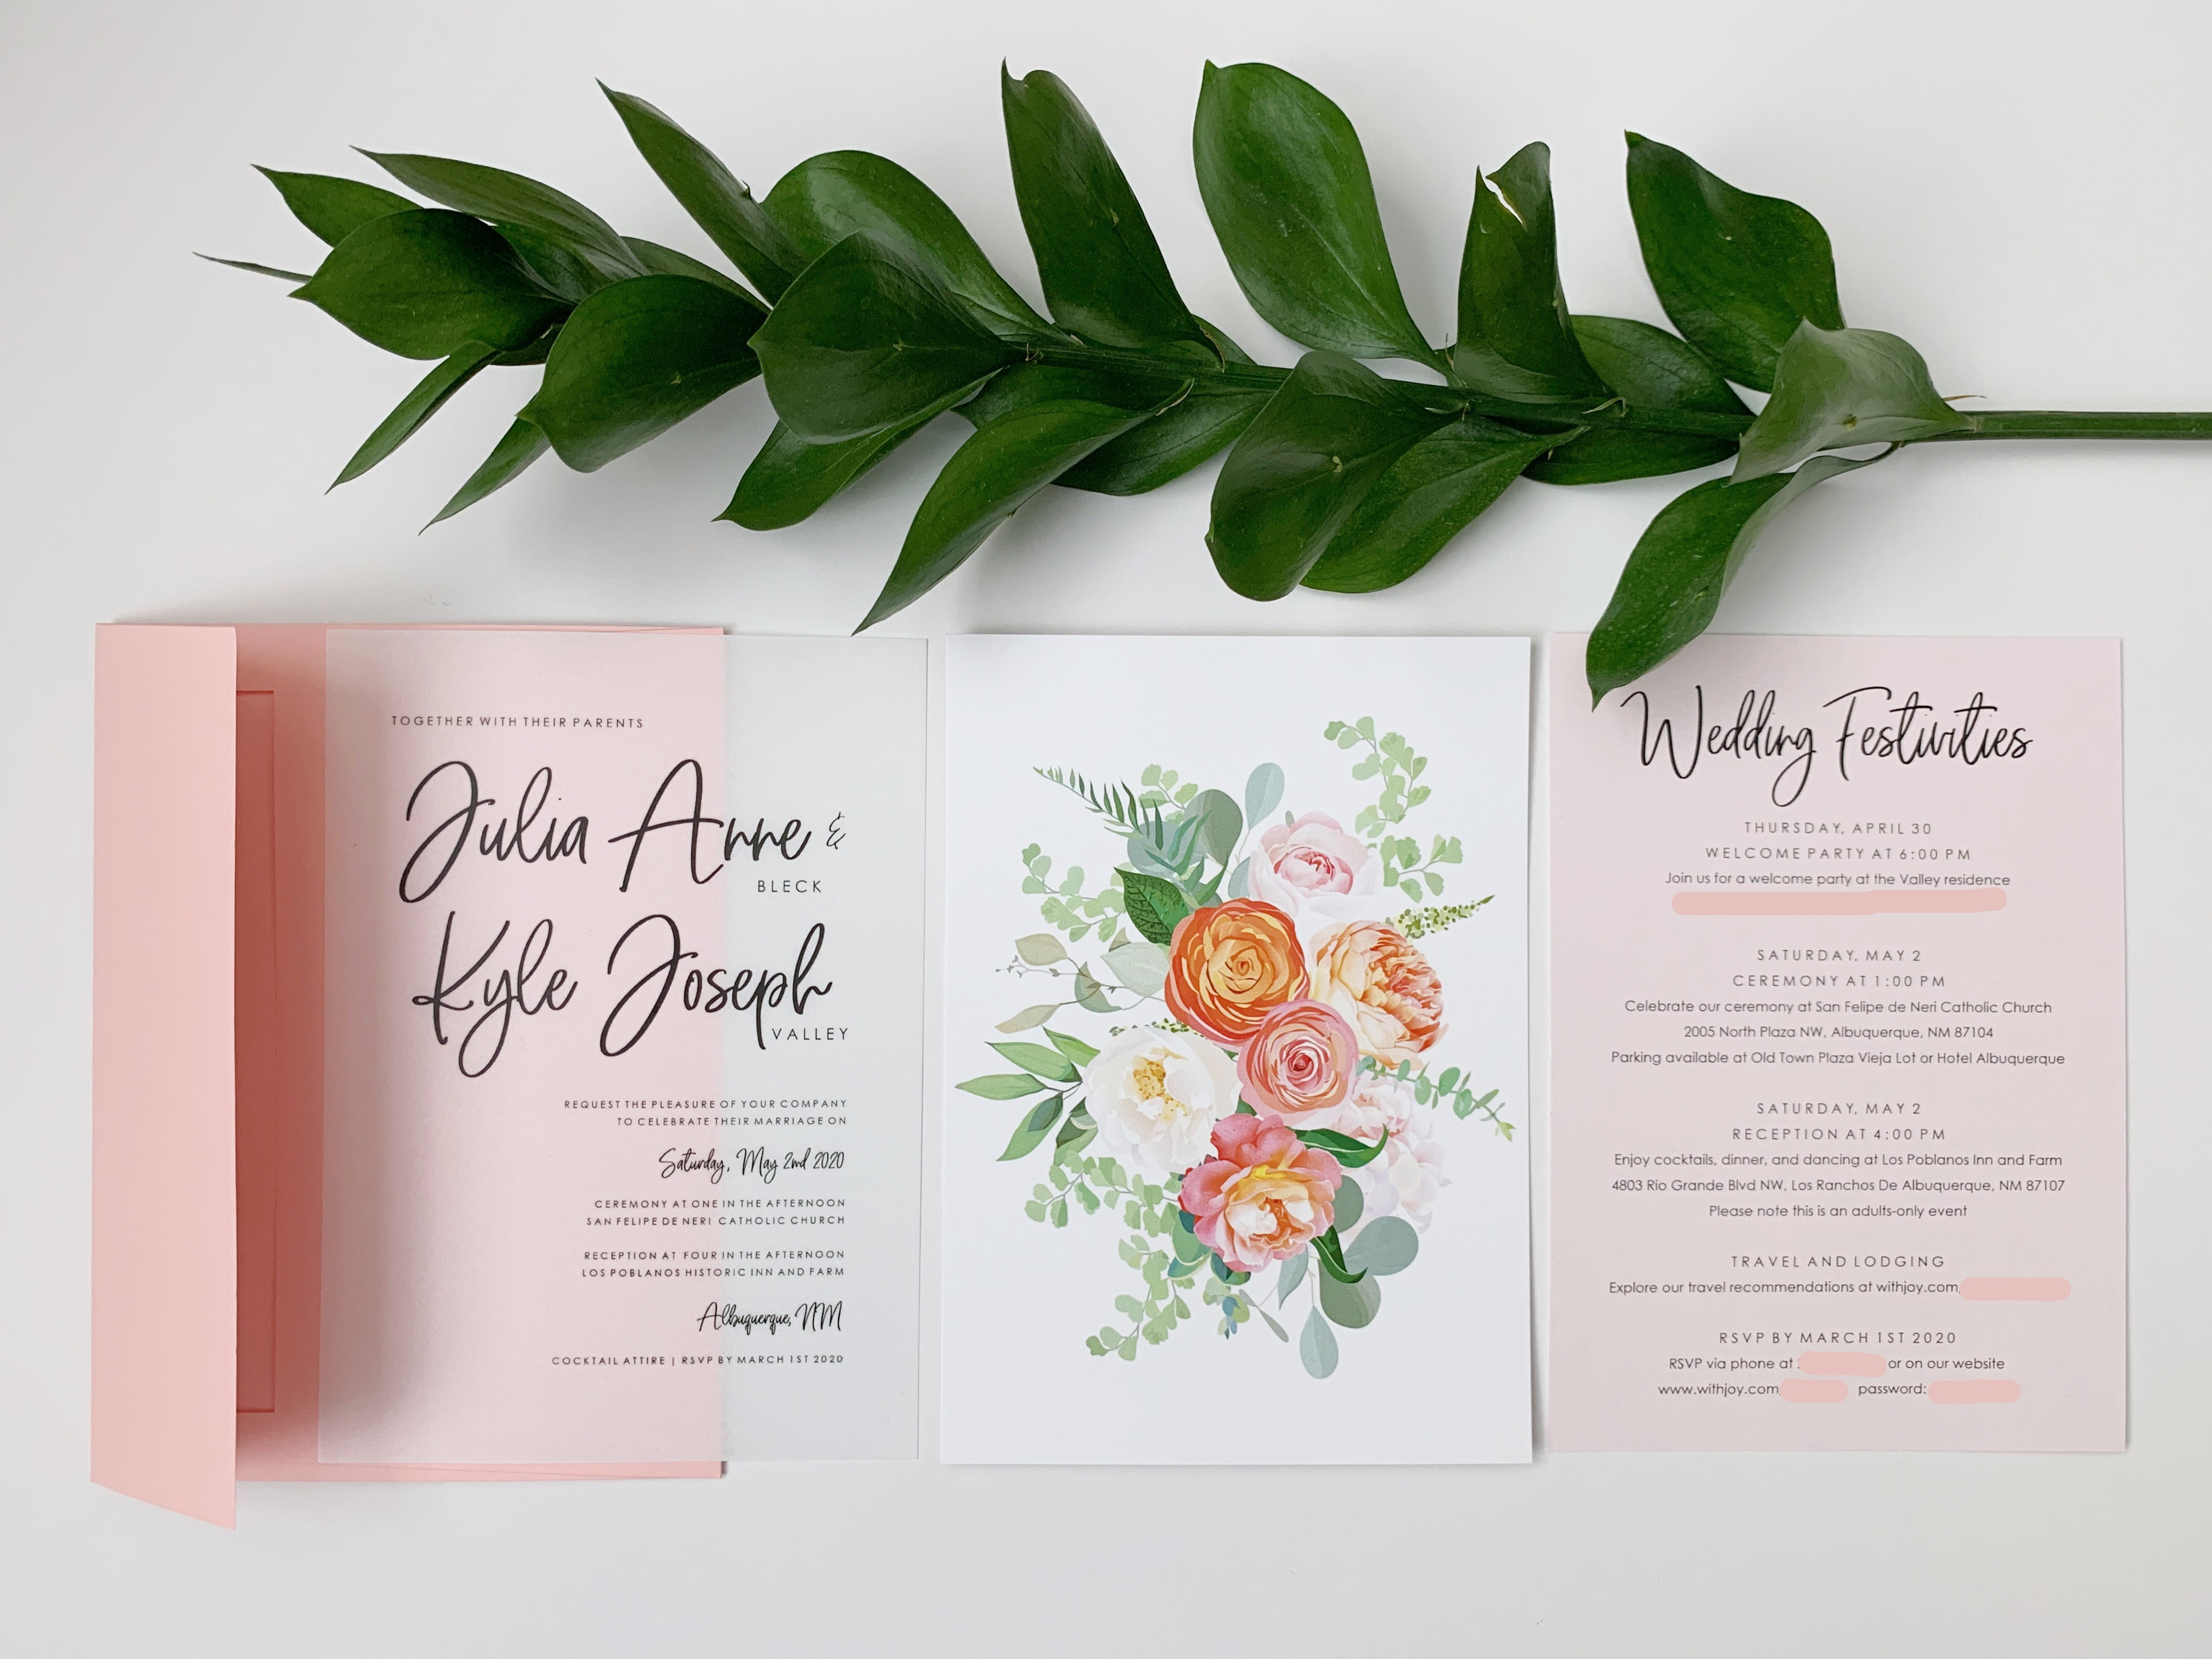 design your own wedding invitations Design your own wedding invitations